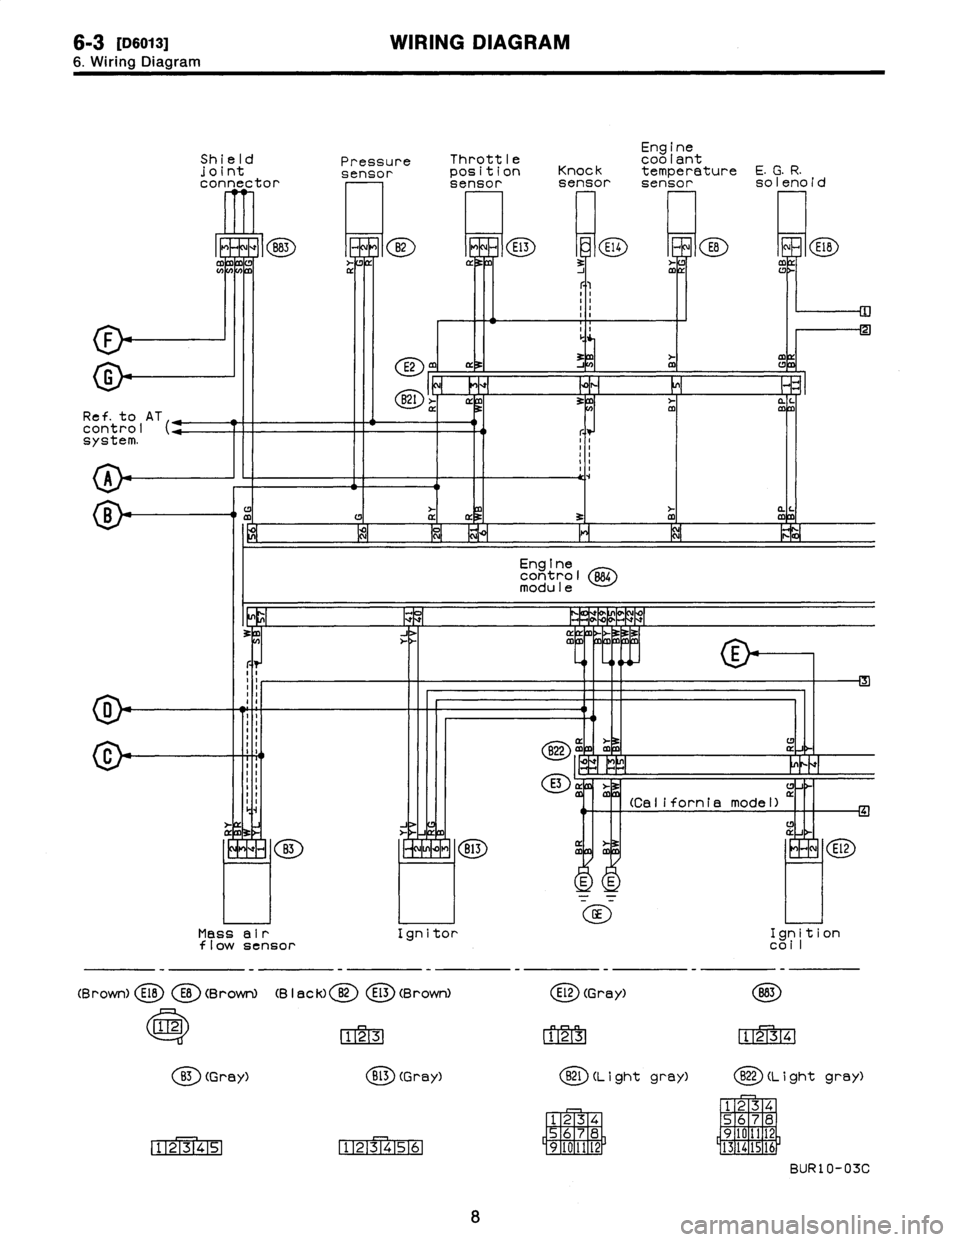 SUBARU LEGACY 1996  Service Repair Manual 6-3
[D6013]
WIRING
DIAGRAM

6
.
Wiring
Diagram

Shield
joint
connector

rE
~
;EB
(
883

E2

B21

Ref
.
toAT
control
system
.

Pressuresensor

....

Englnecontro
I
gg4
module

....

B22

E3

(Californi